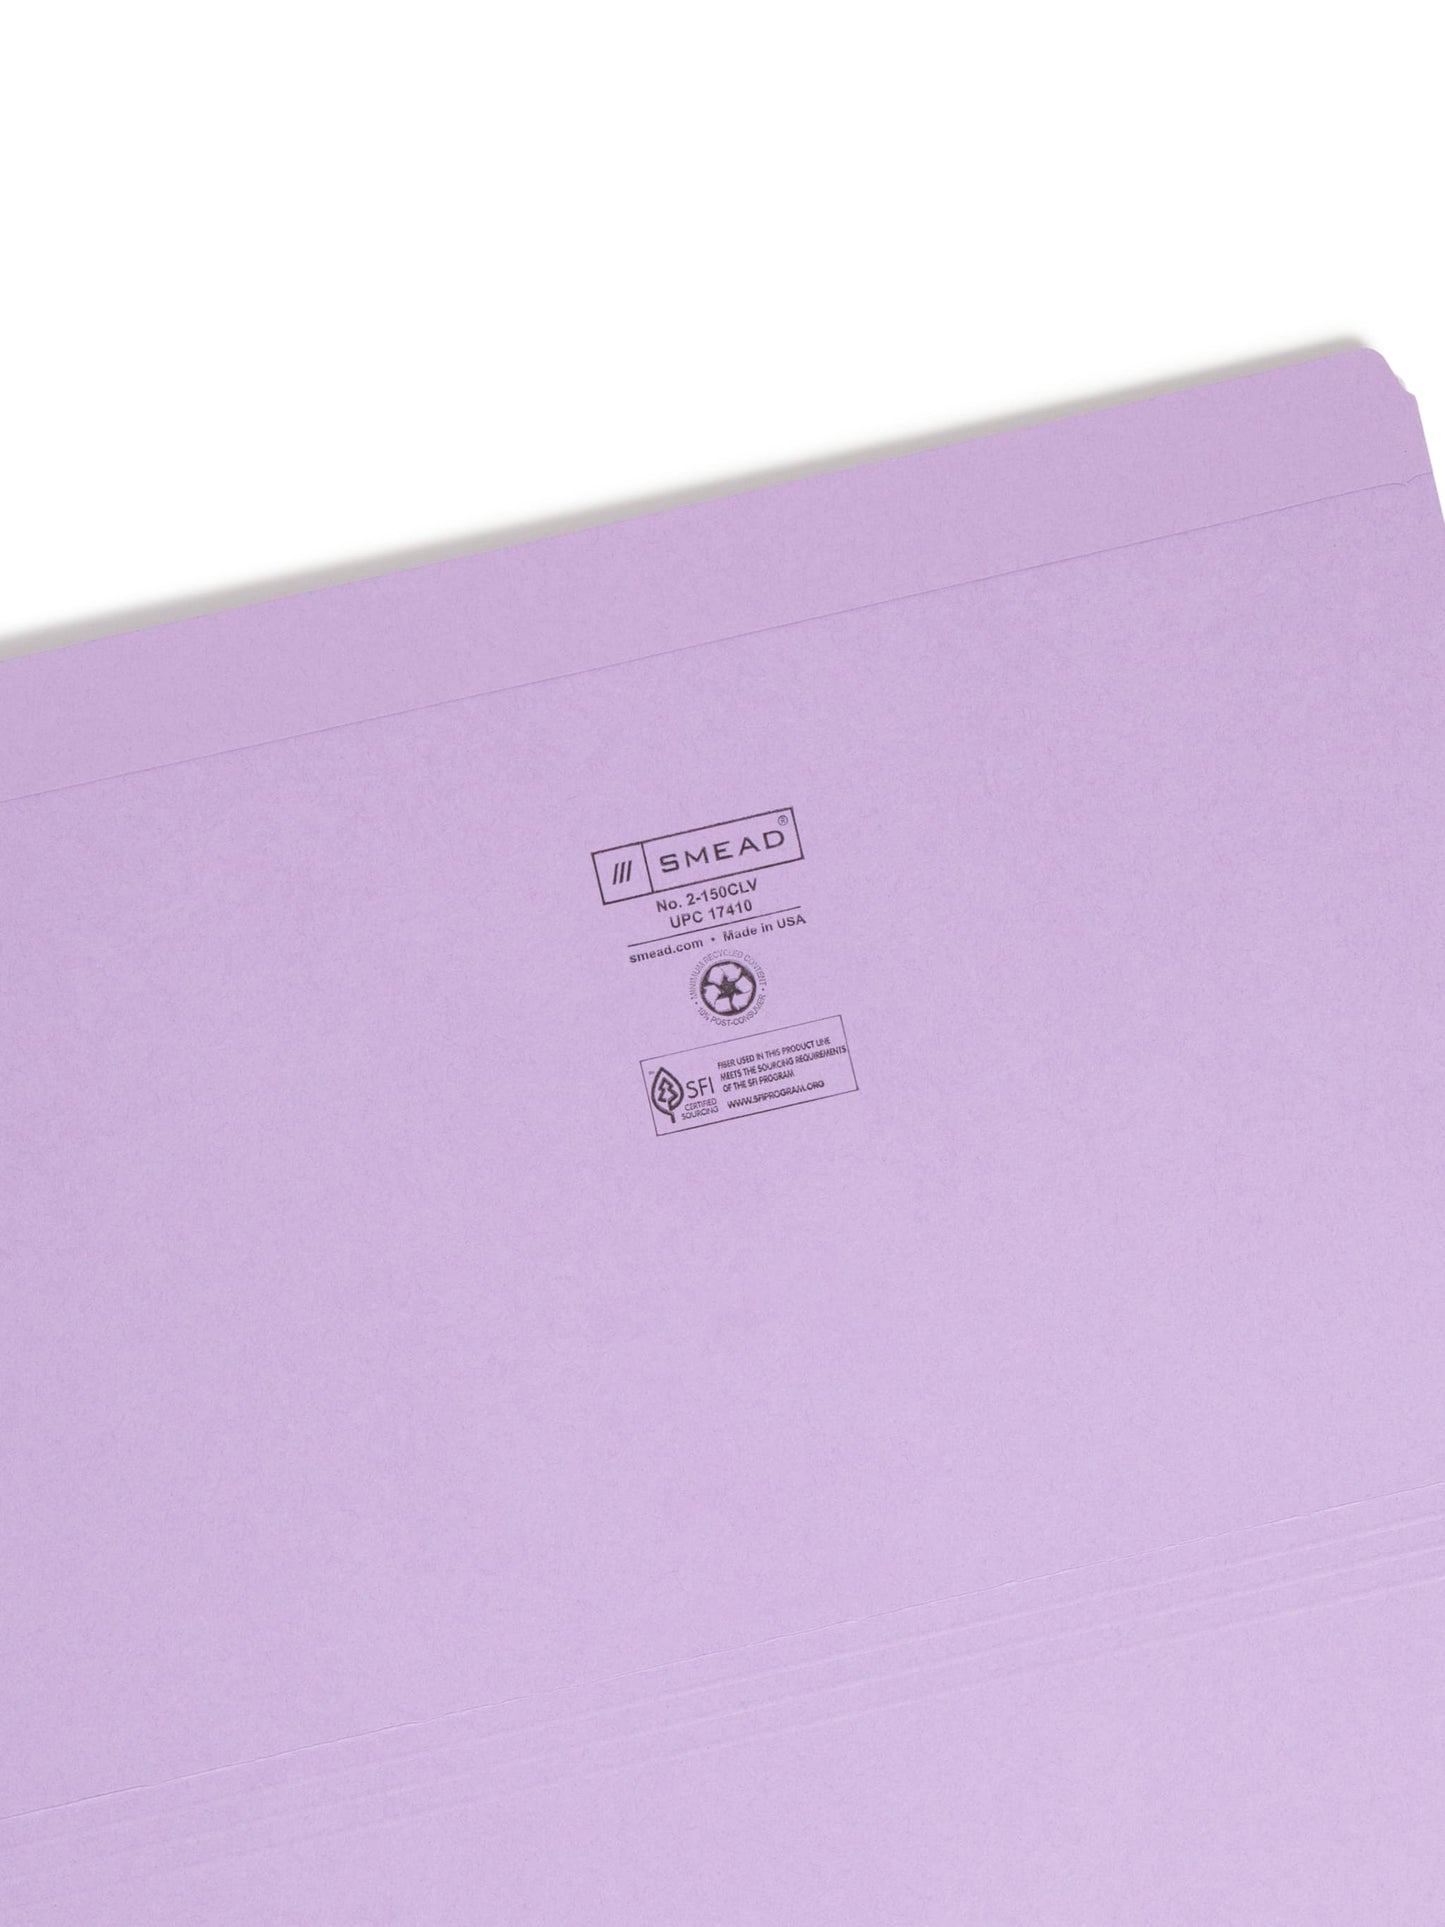 Reinforced Tab File Folders, Straight-Cut Tab, Lavender Color, Legal Size, Set of 100, 086486174107